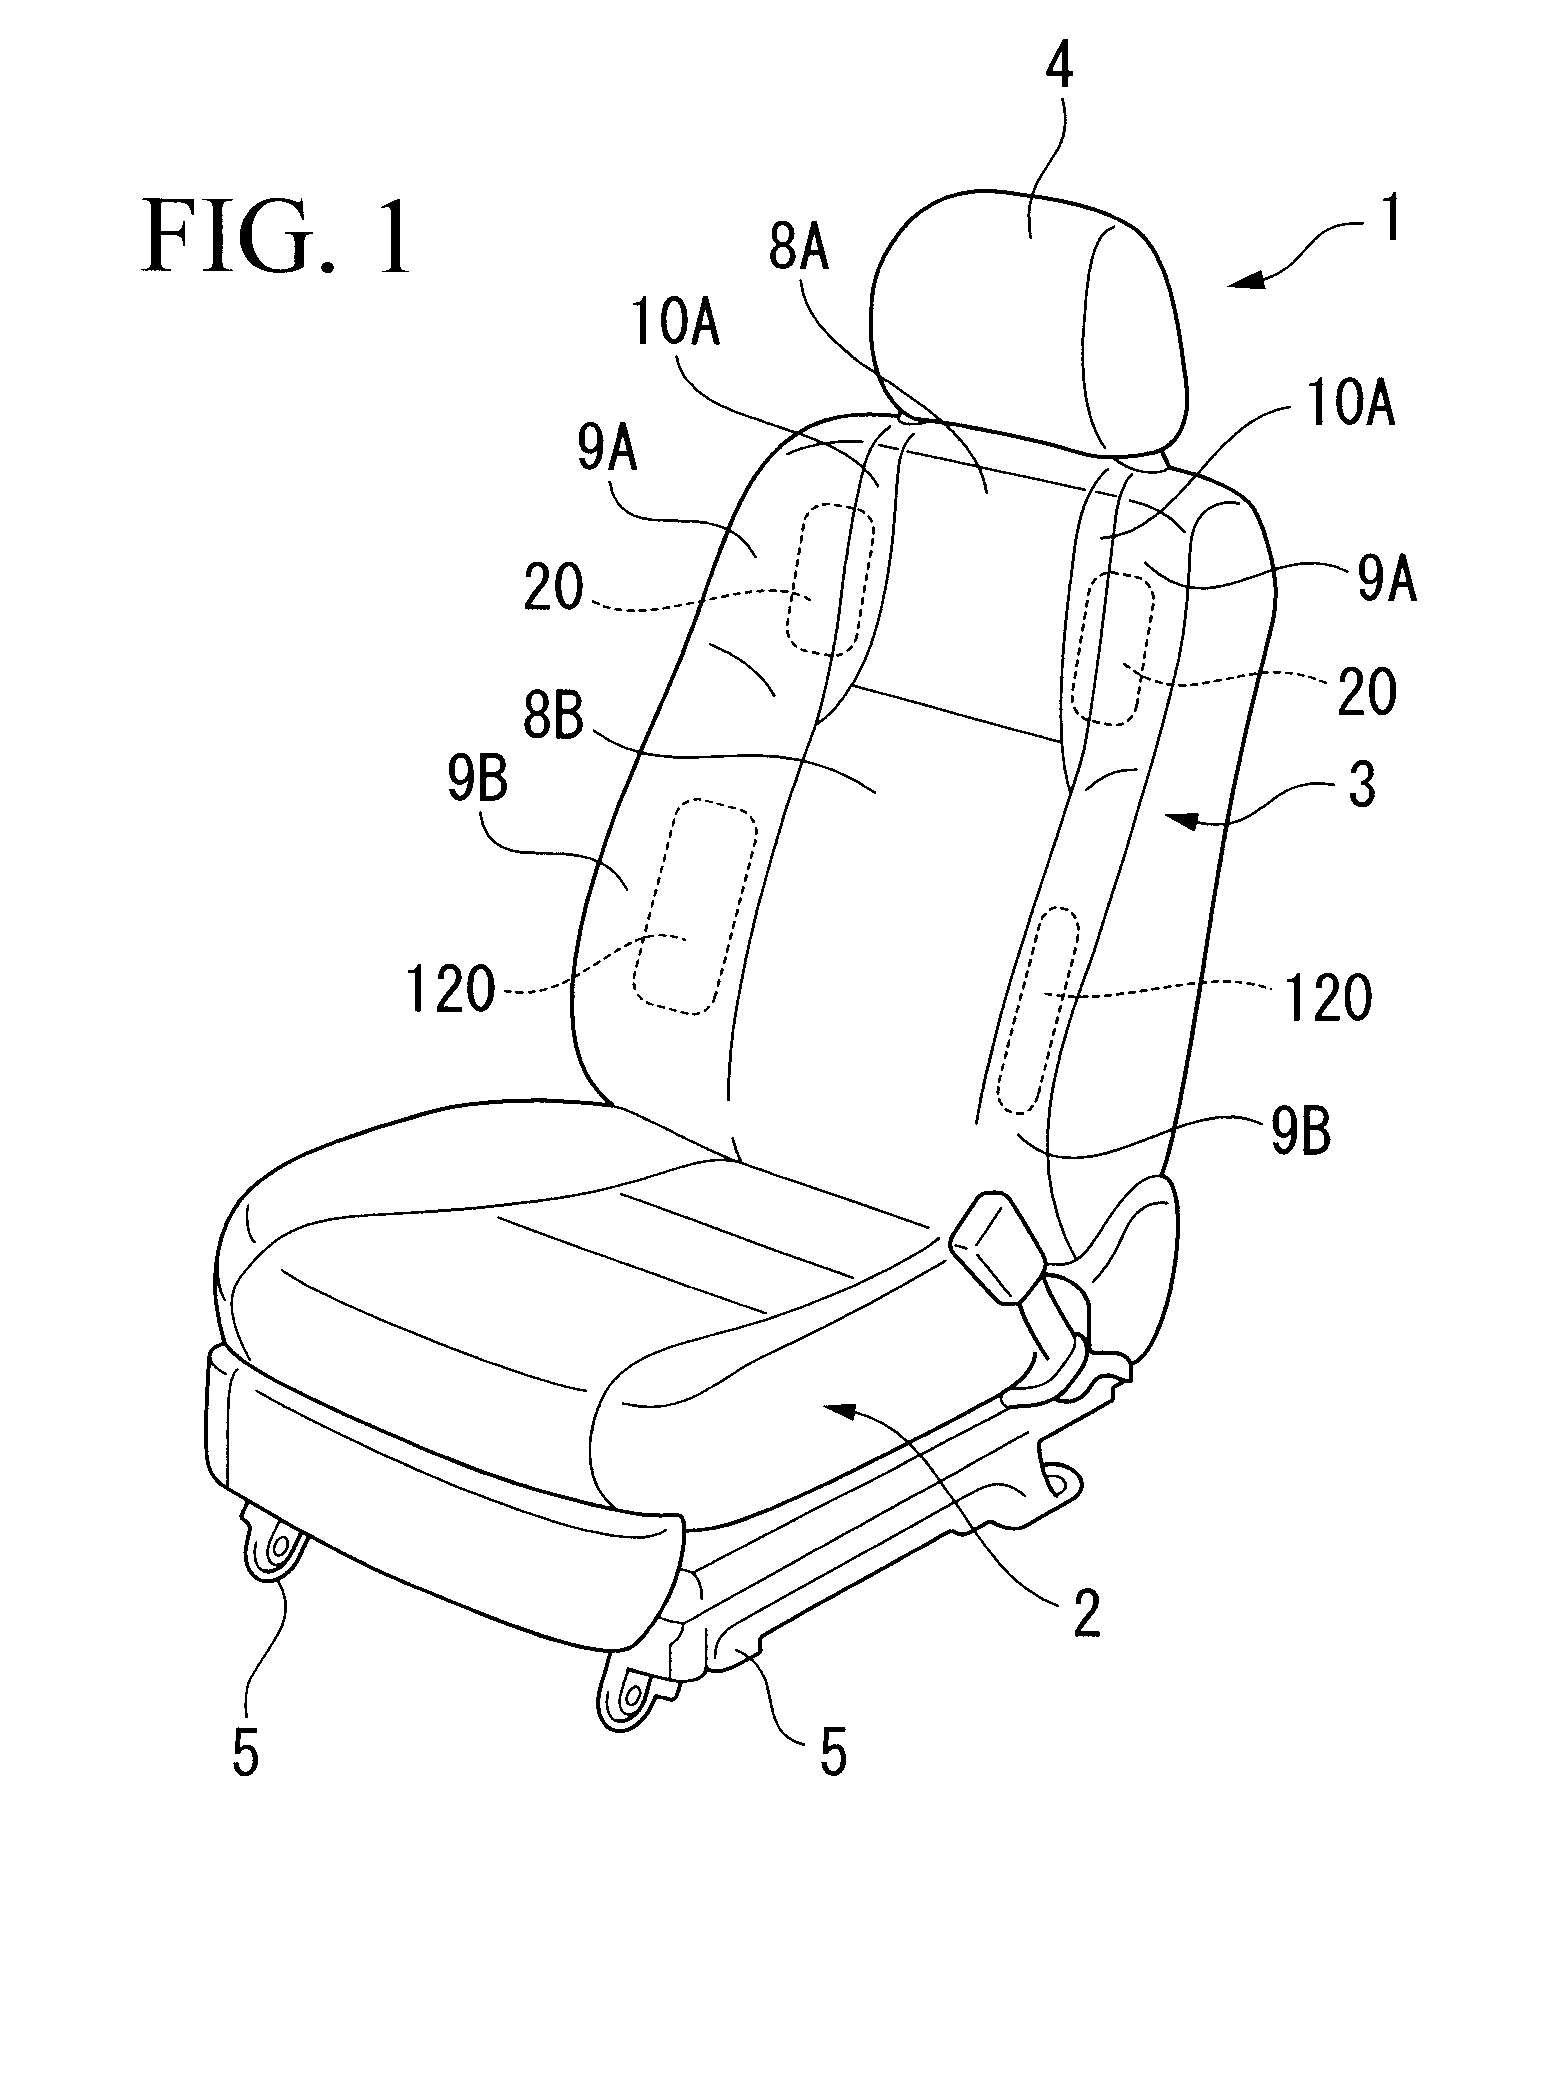 Seat of vehicle